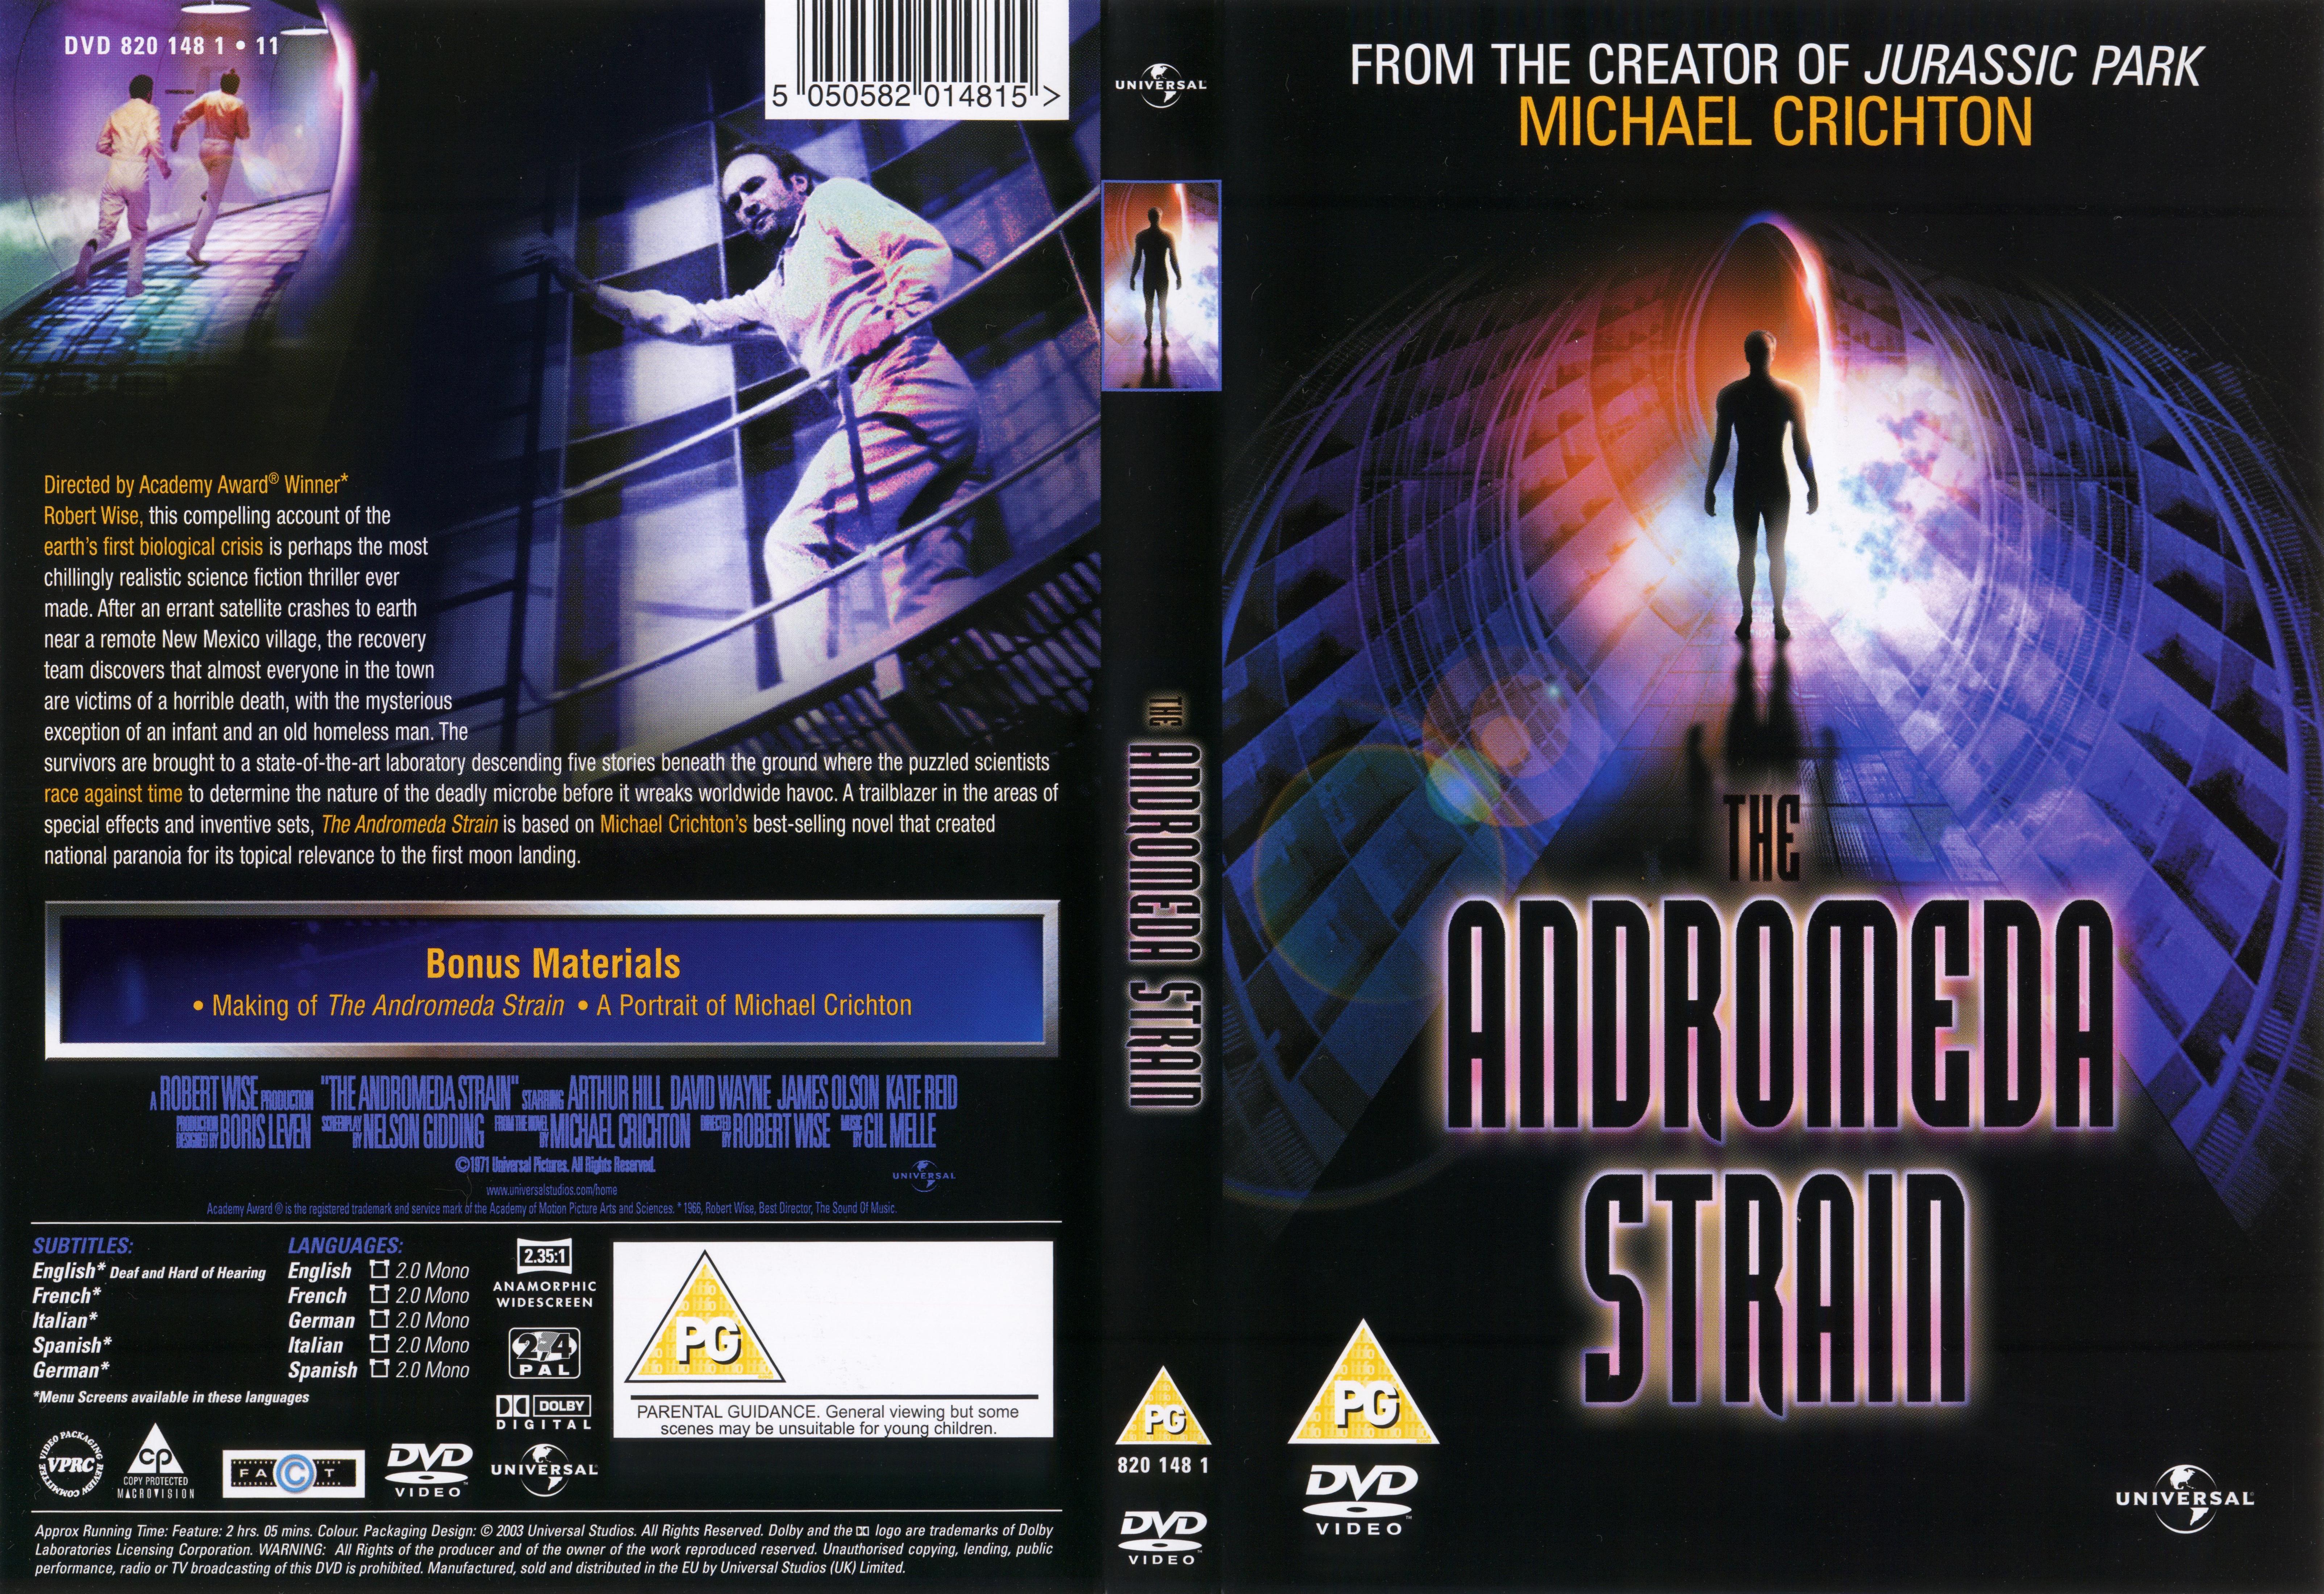 andromeda strain movie remake